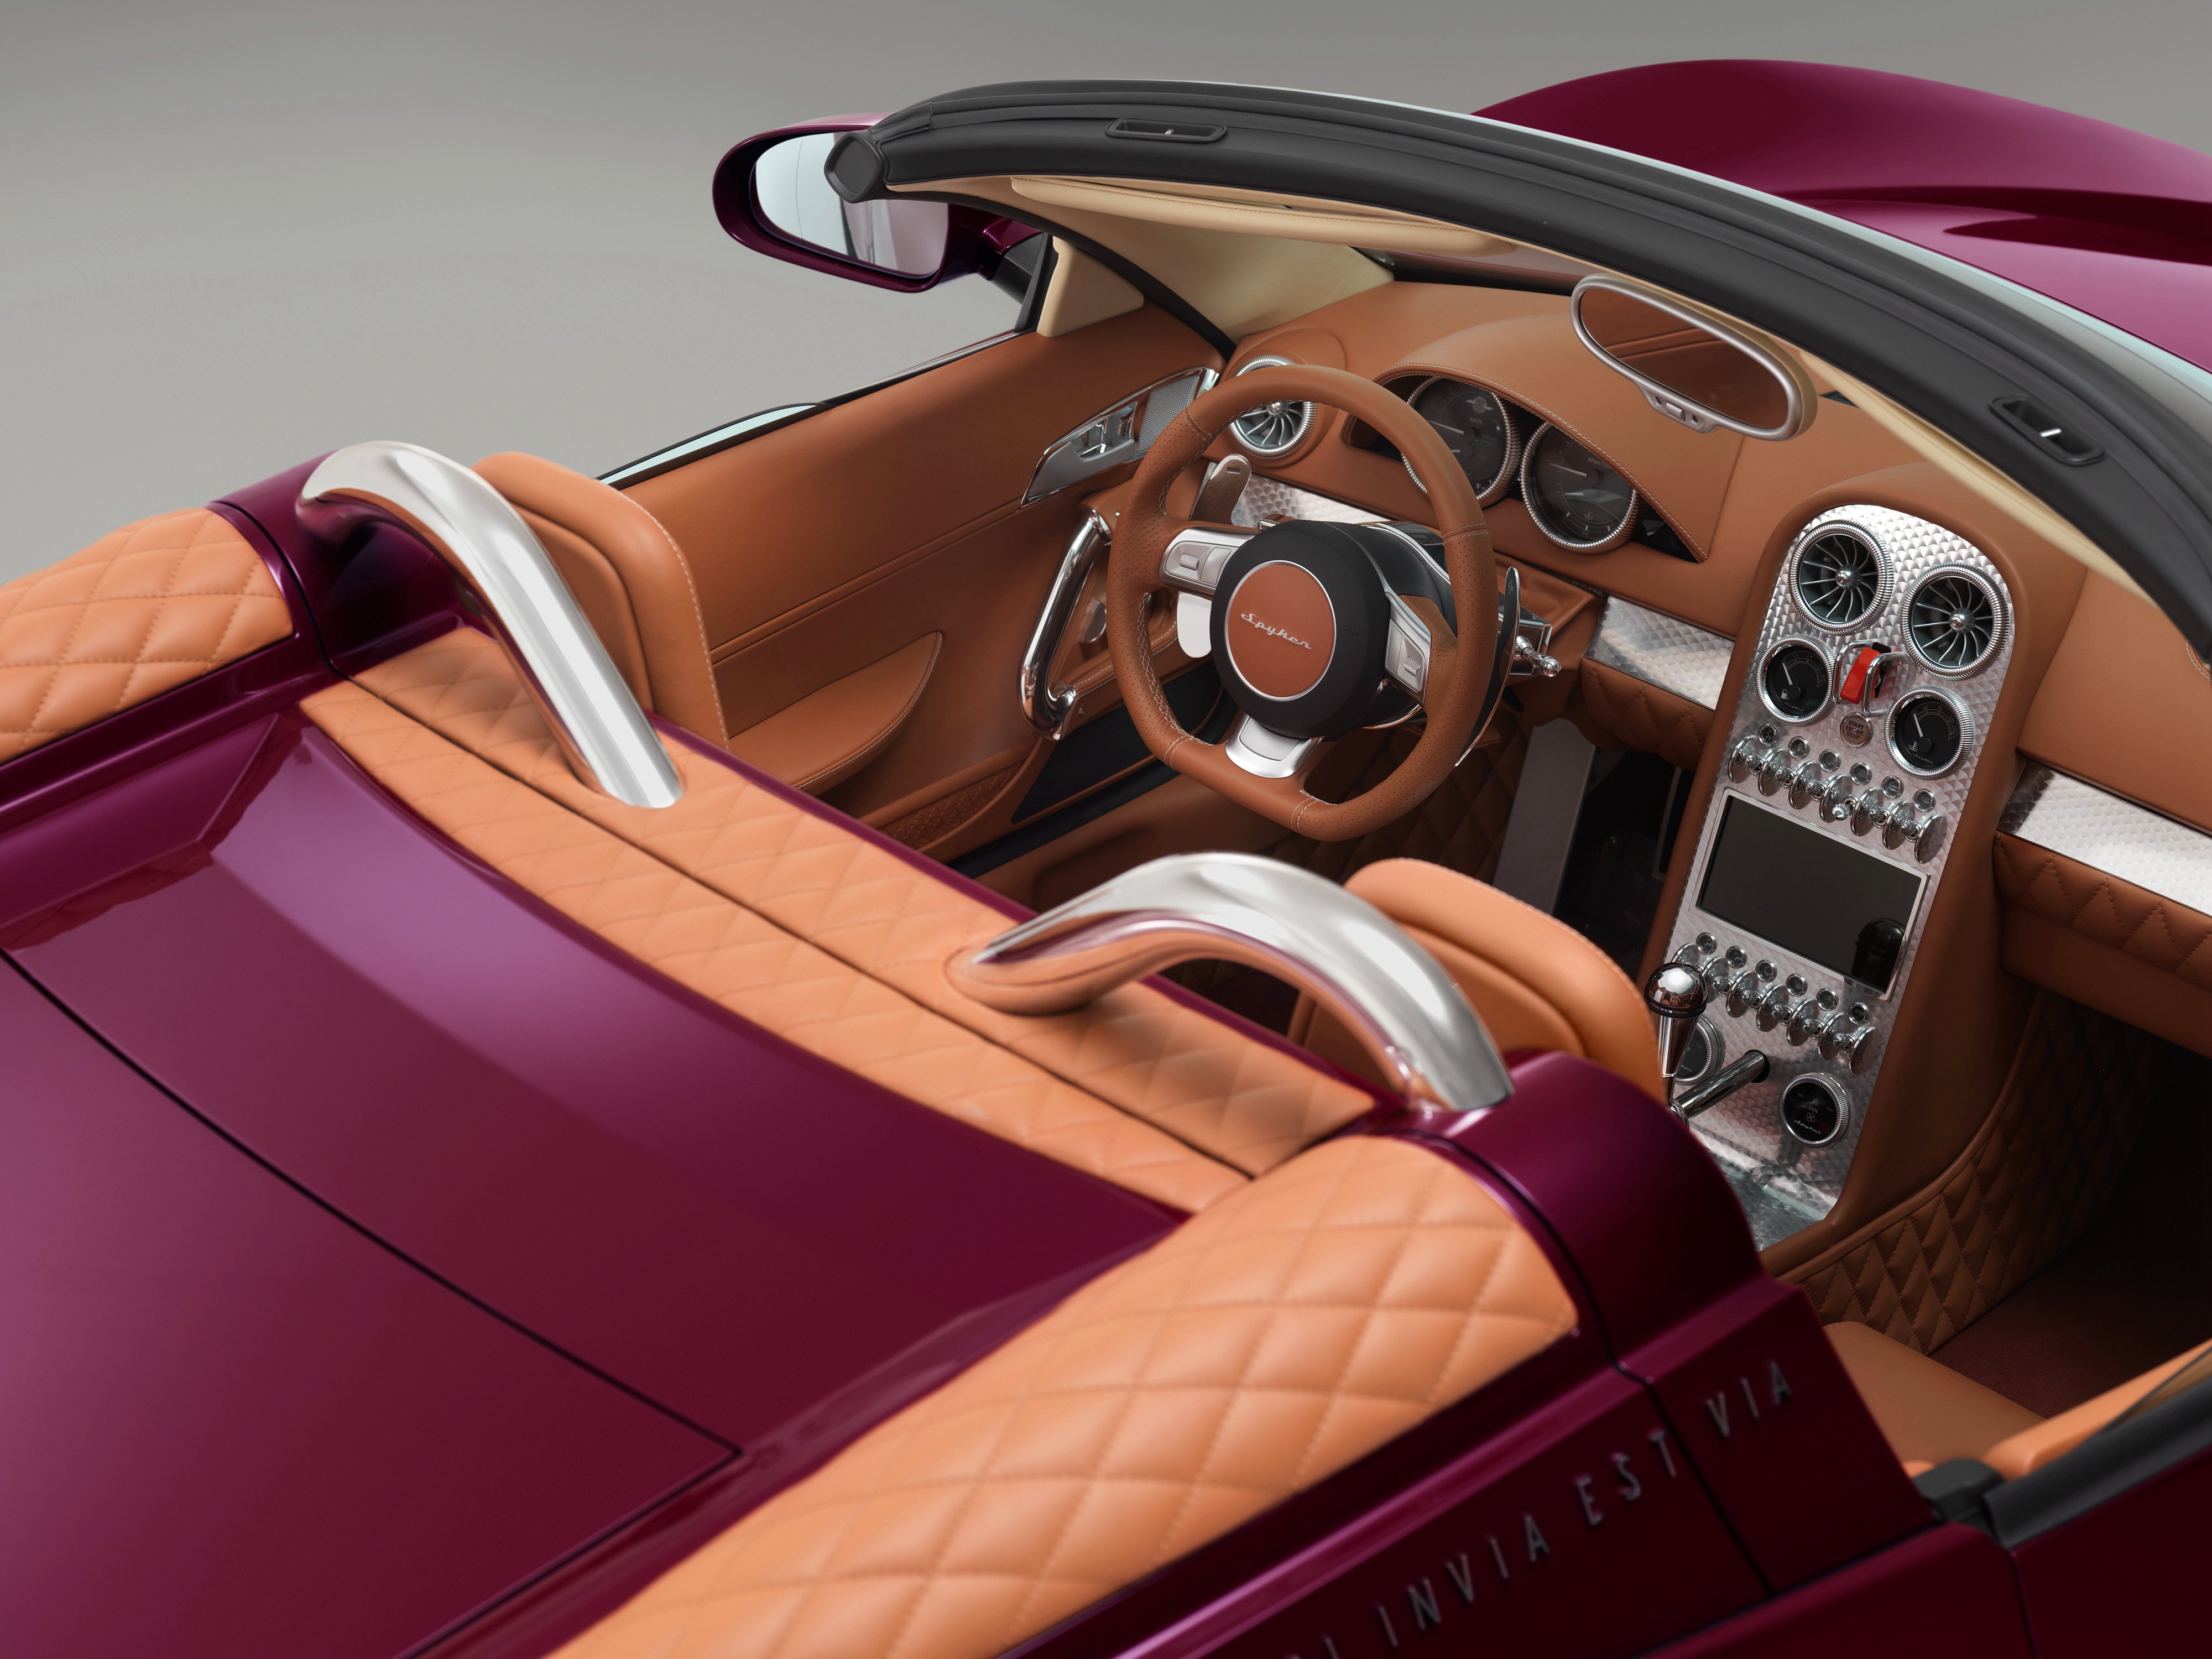 2013, Spyker, B 6, Venator, Spyder, Concept, Supercar Wallpaper